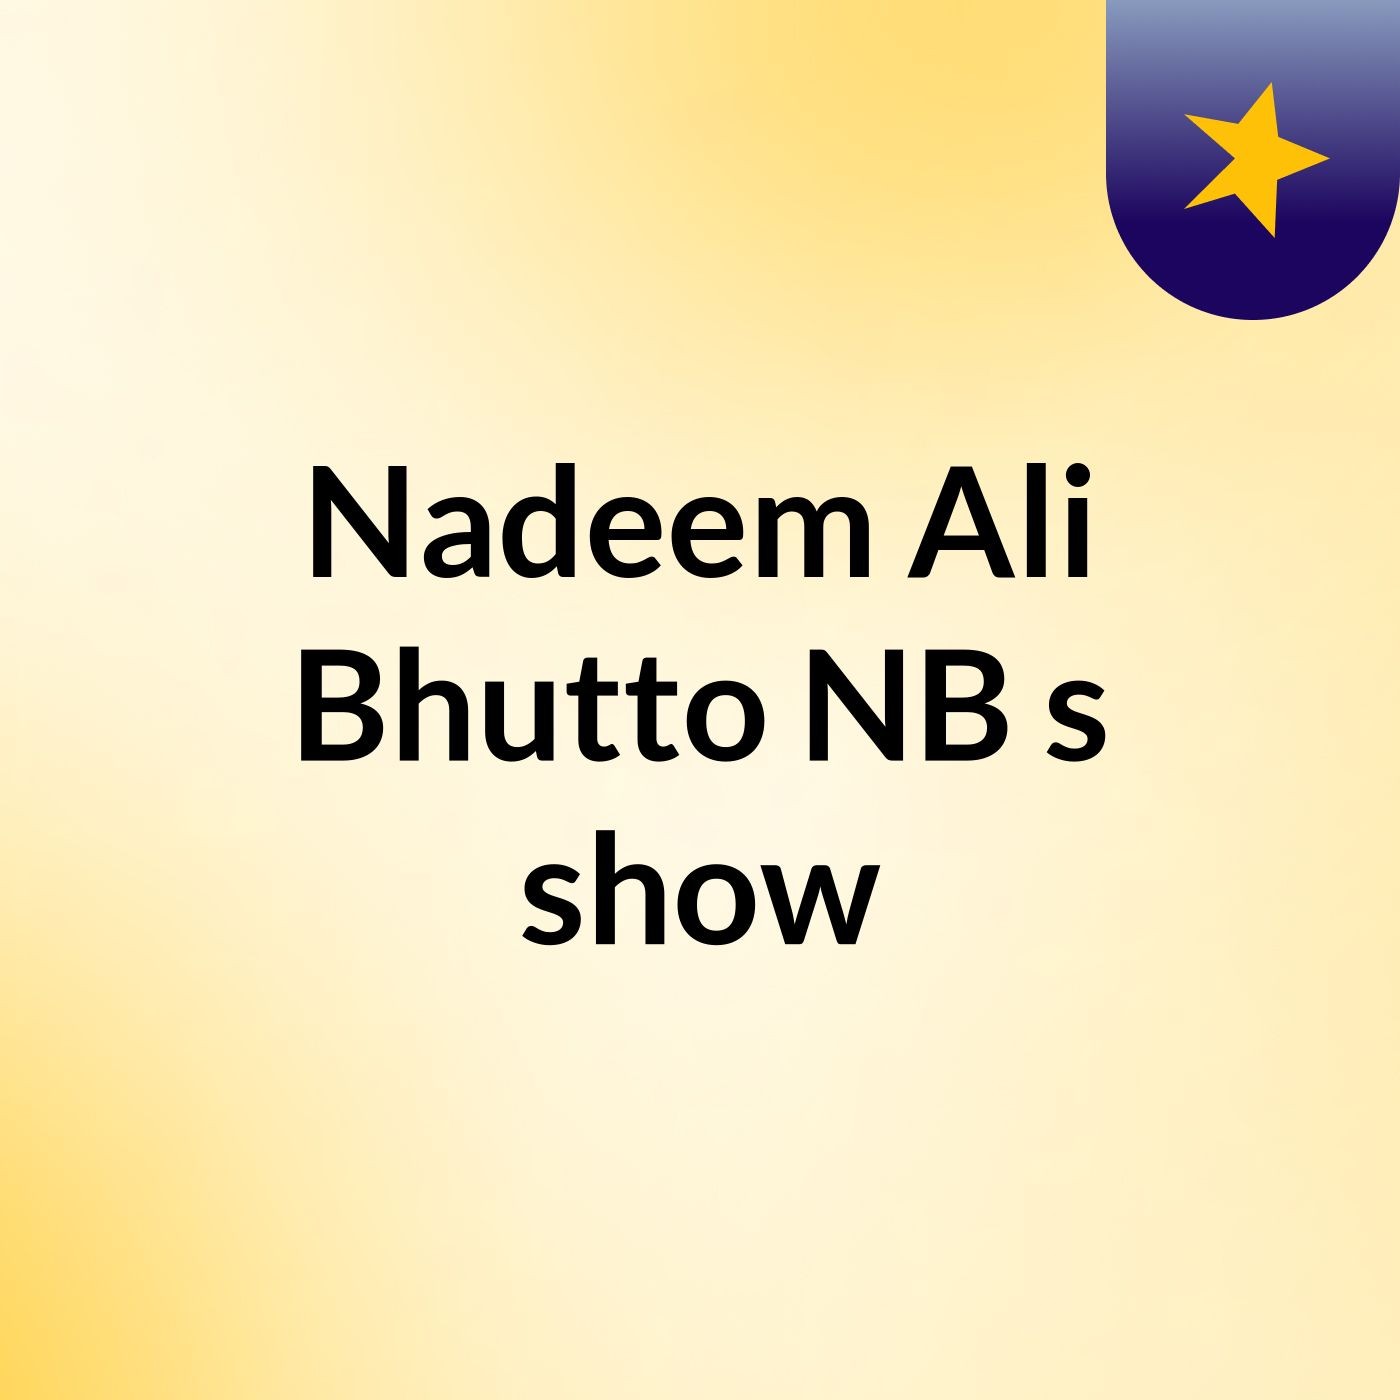 Nadeem Ali Bhutto NB's show